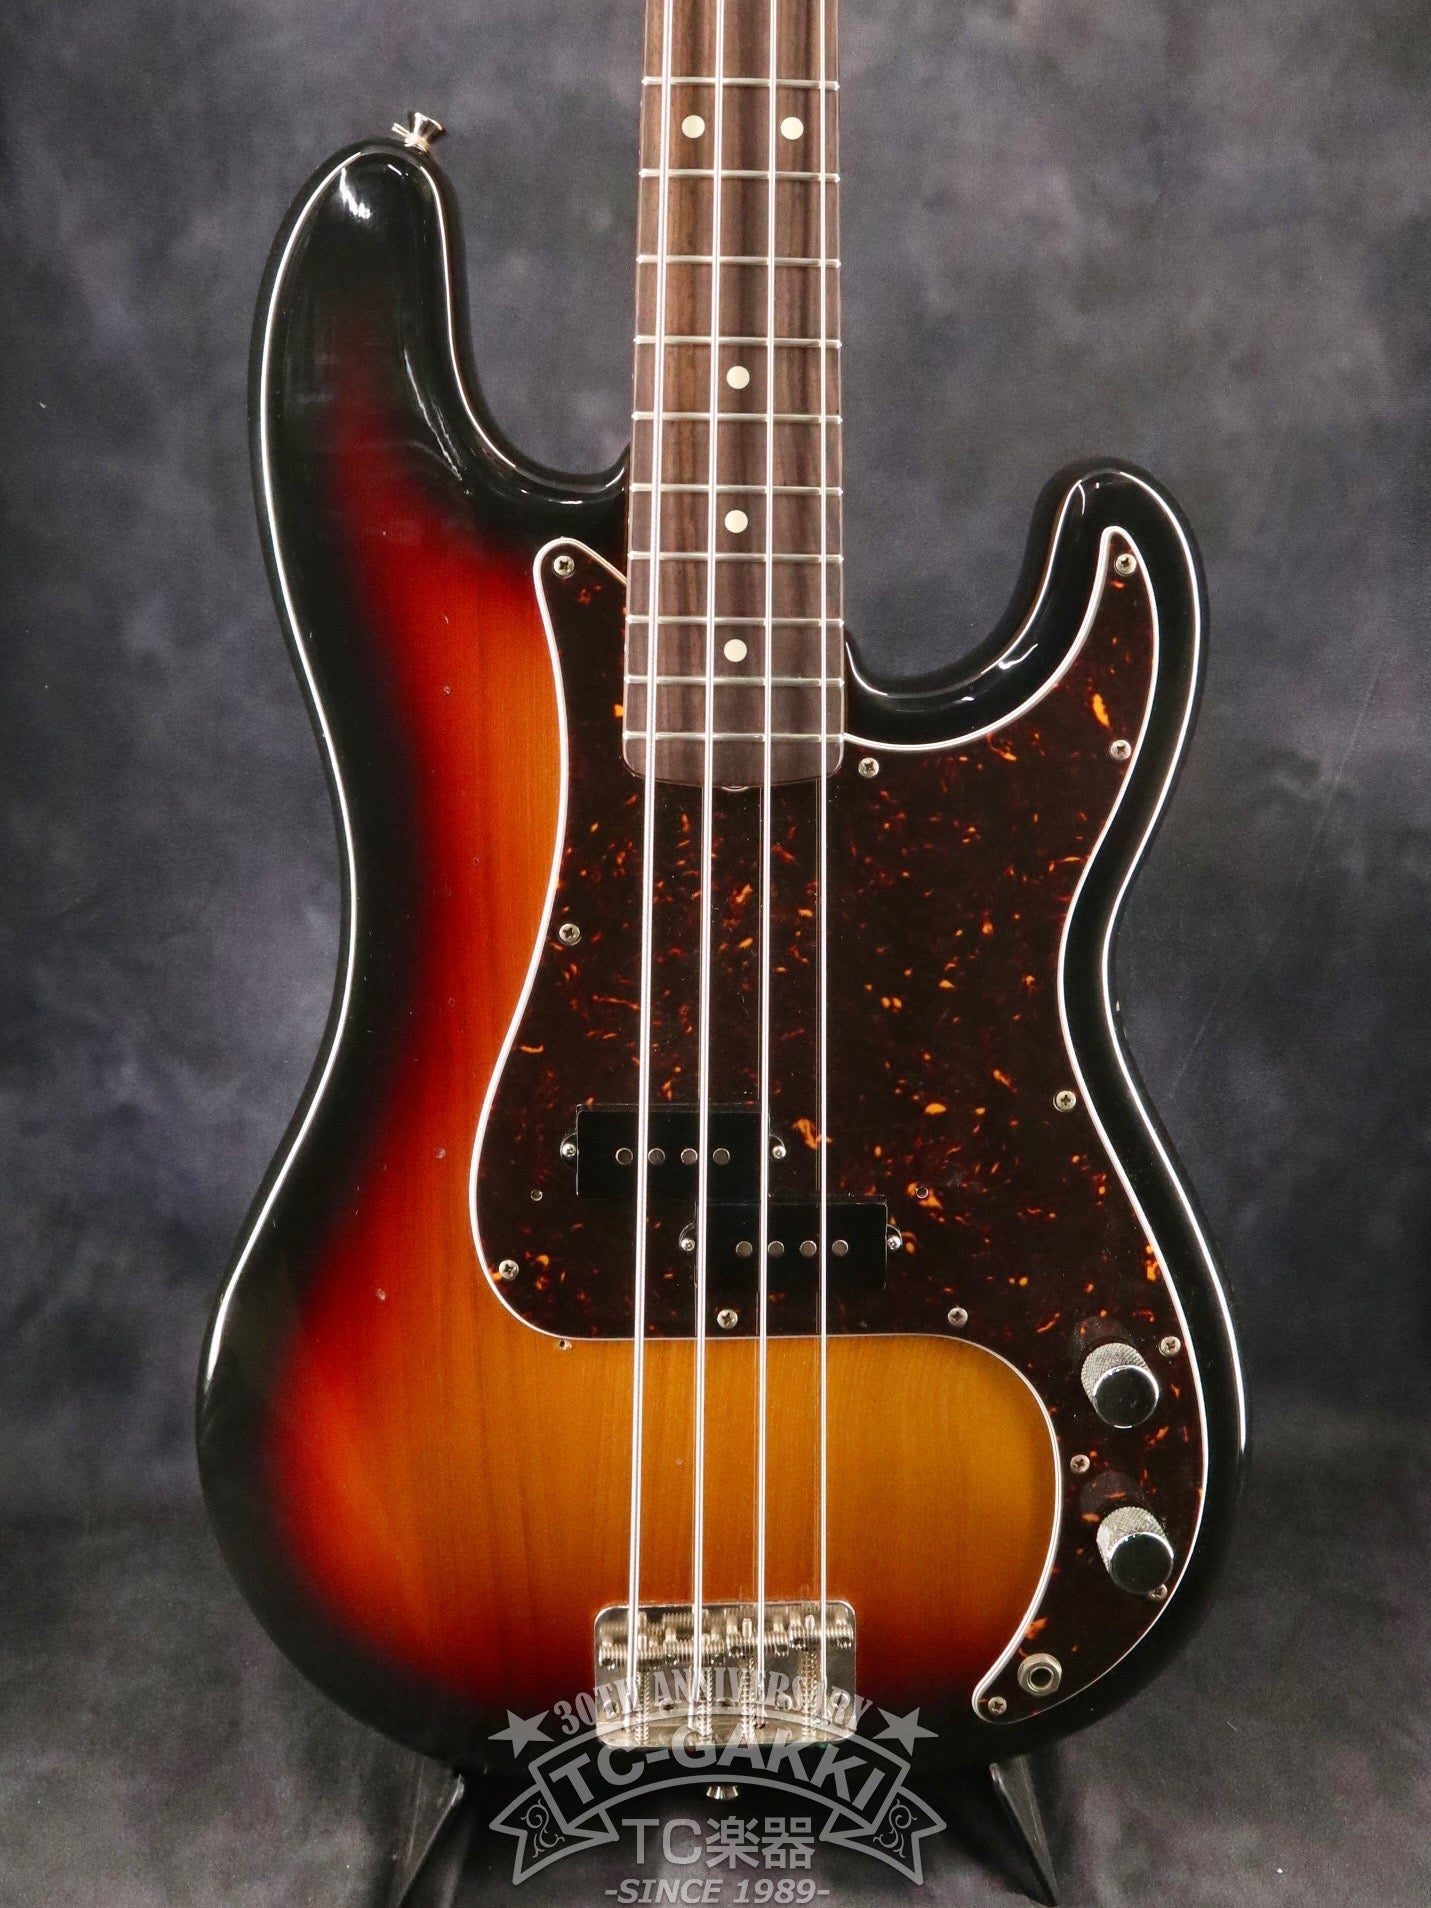 1982 PB62-75 Neck Component Bass